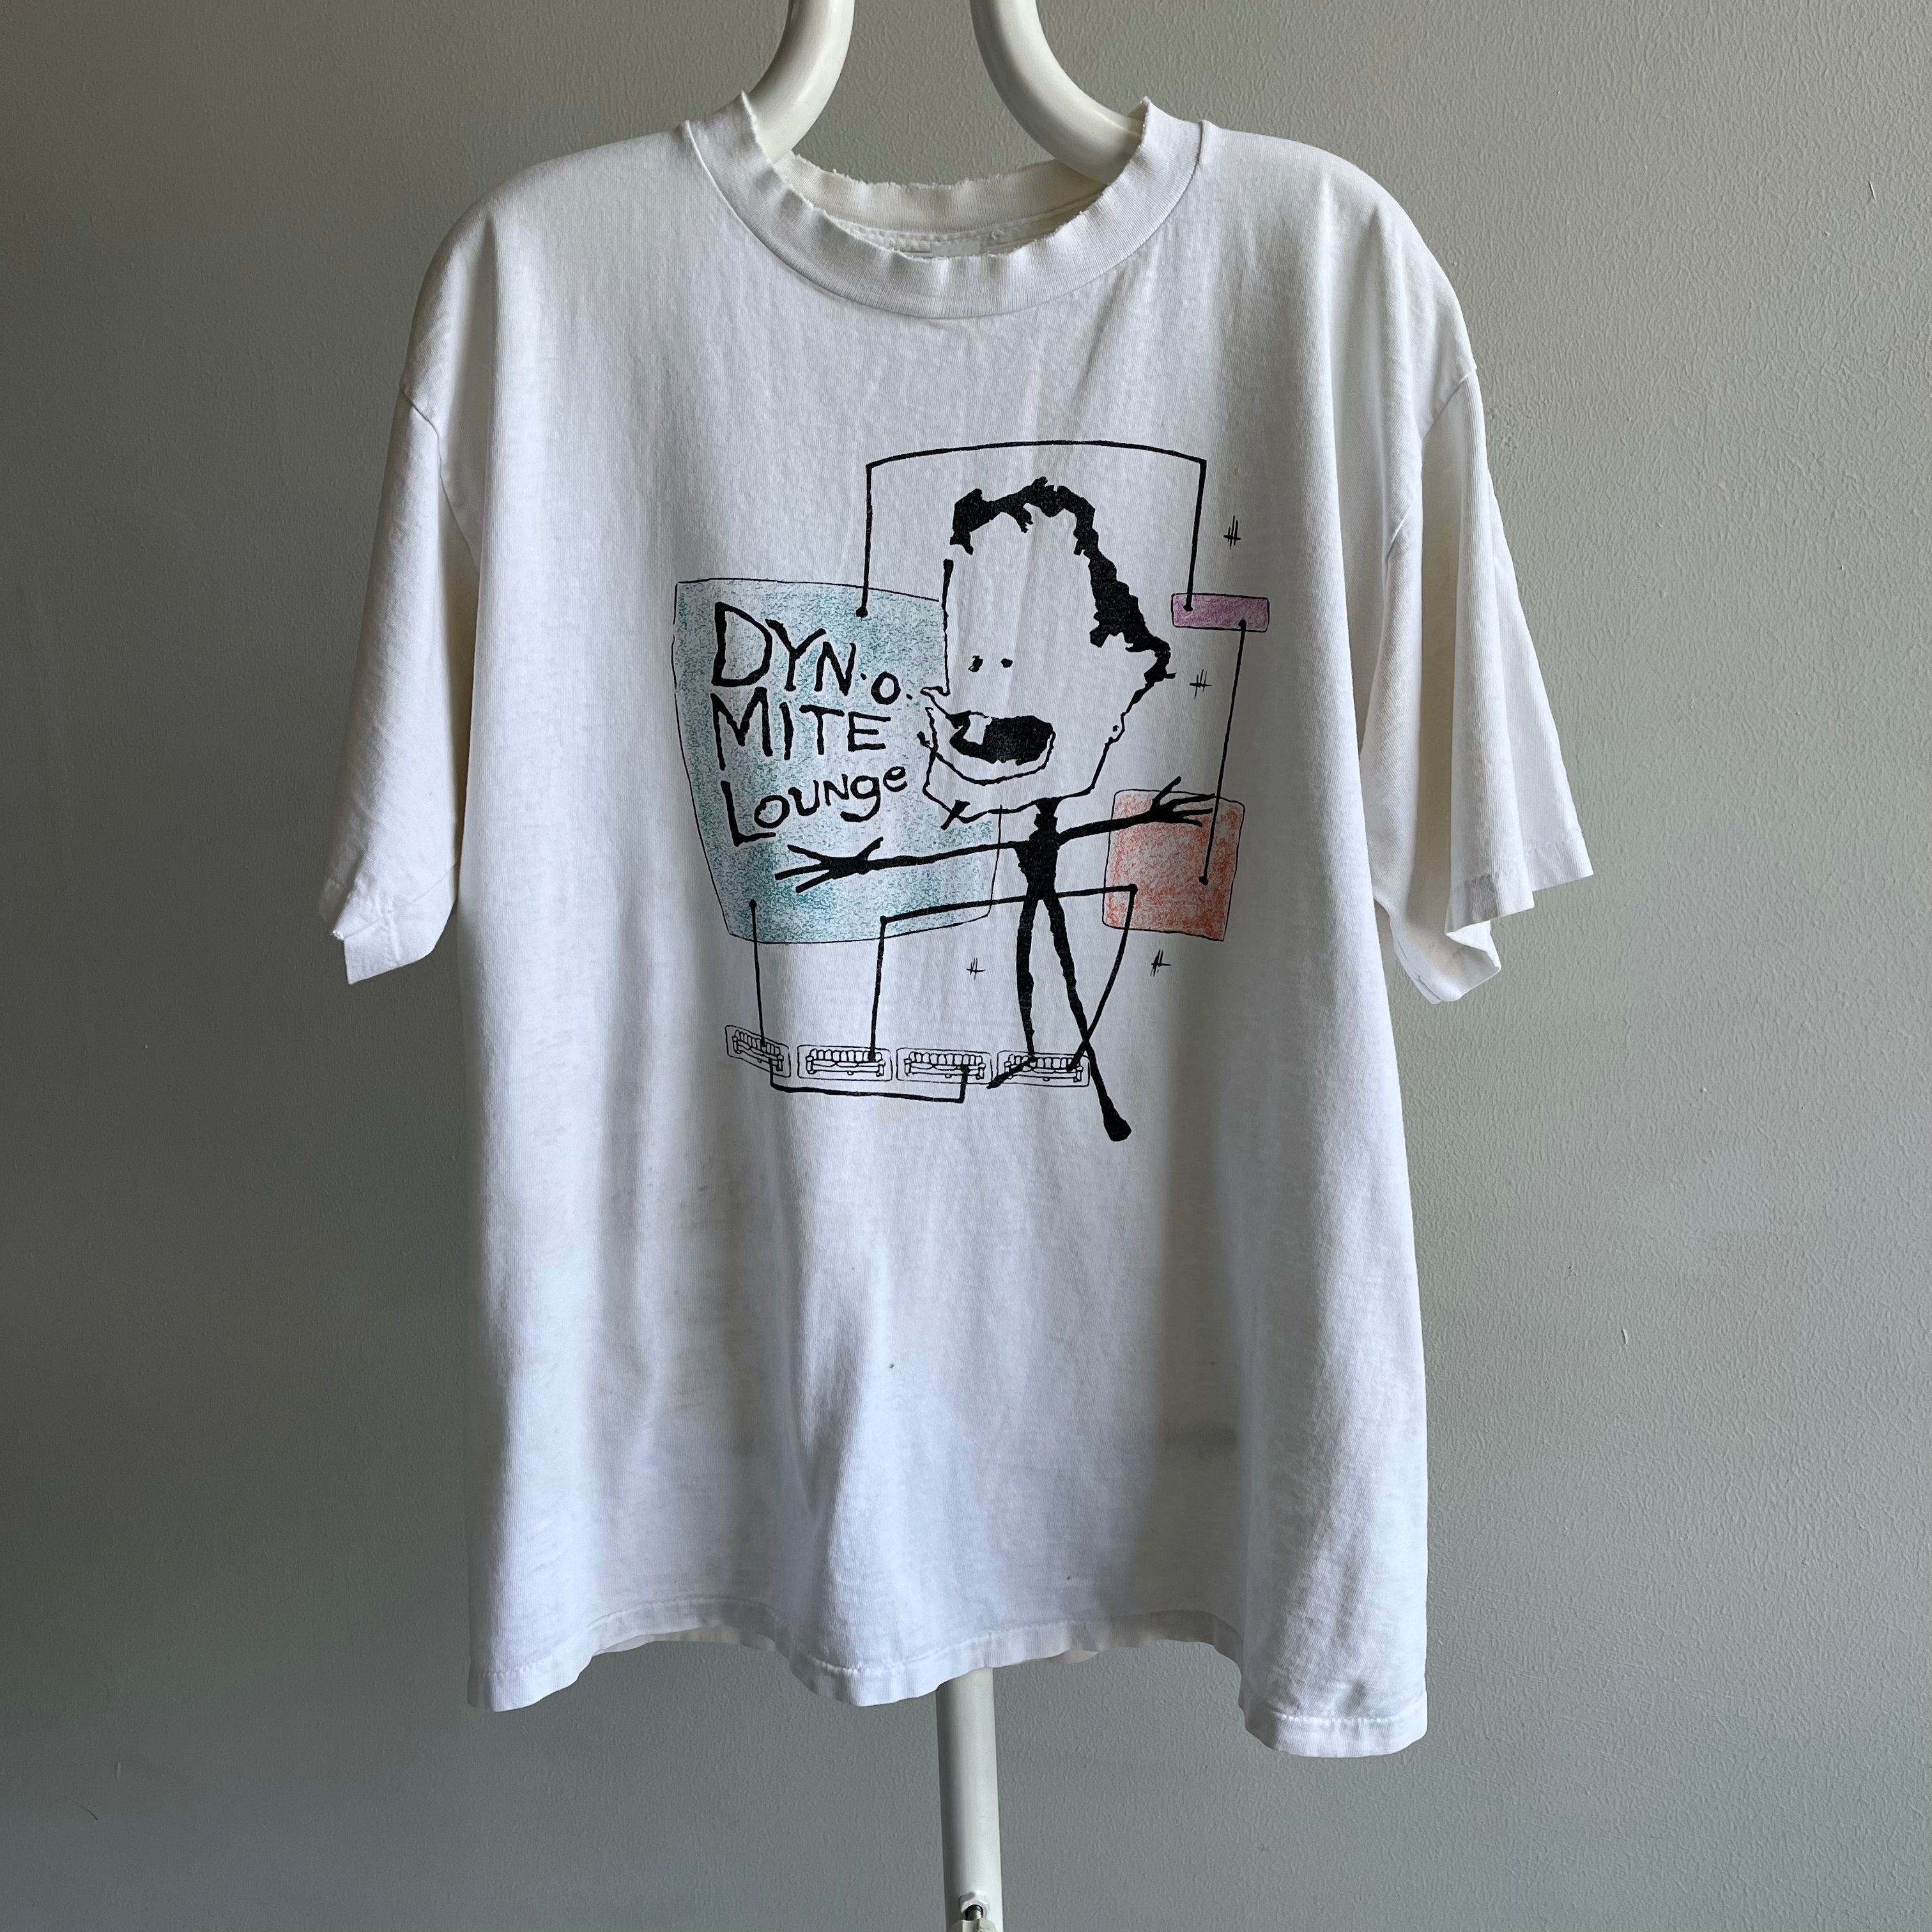 1990s Dyn-o-mite Lounge Worn Out T-Shirt